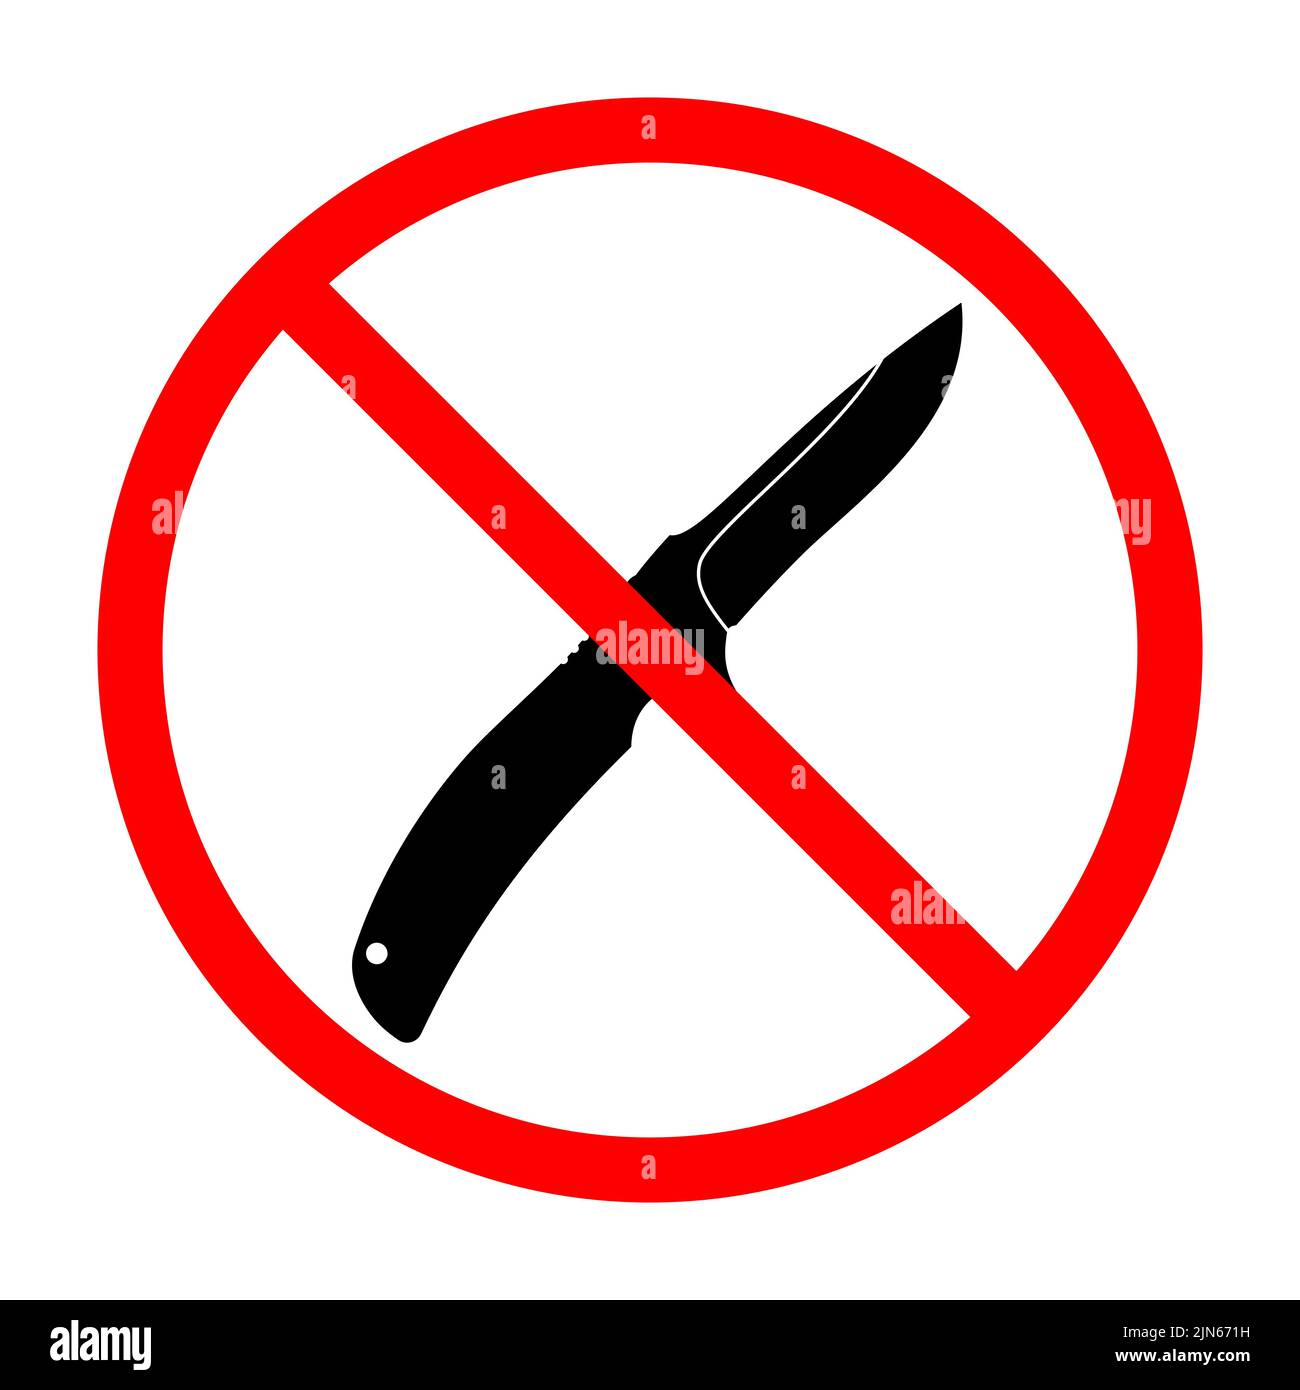 No Knife sign. Knife ban sign. Dangerous weapon. Prohibition sign. Vector illustration.v Stock Vector